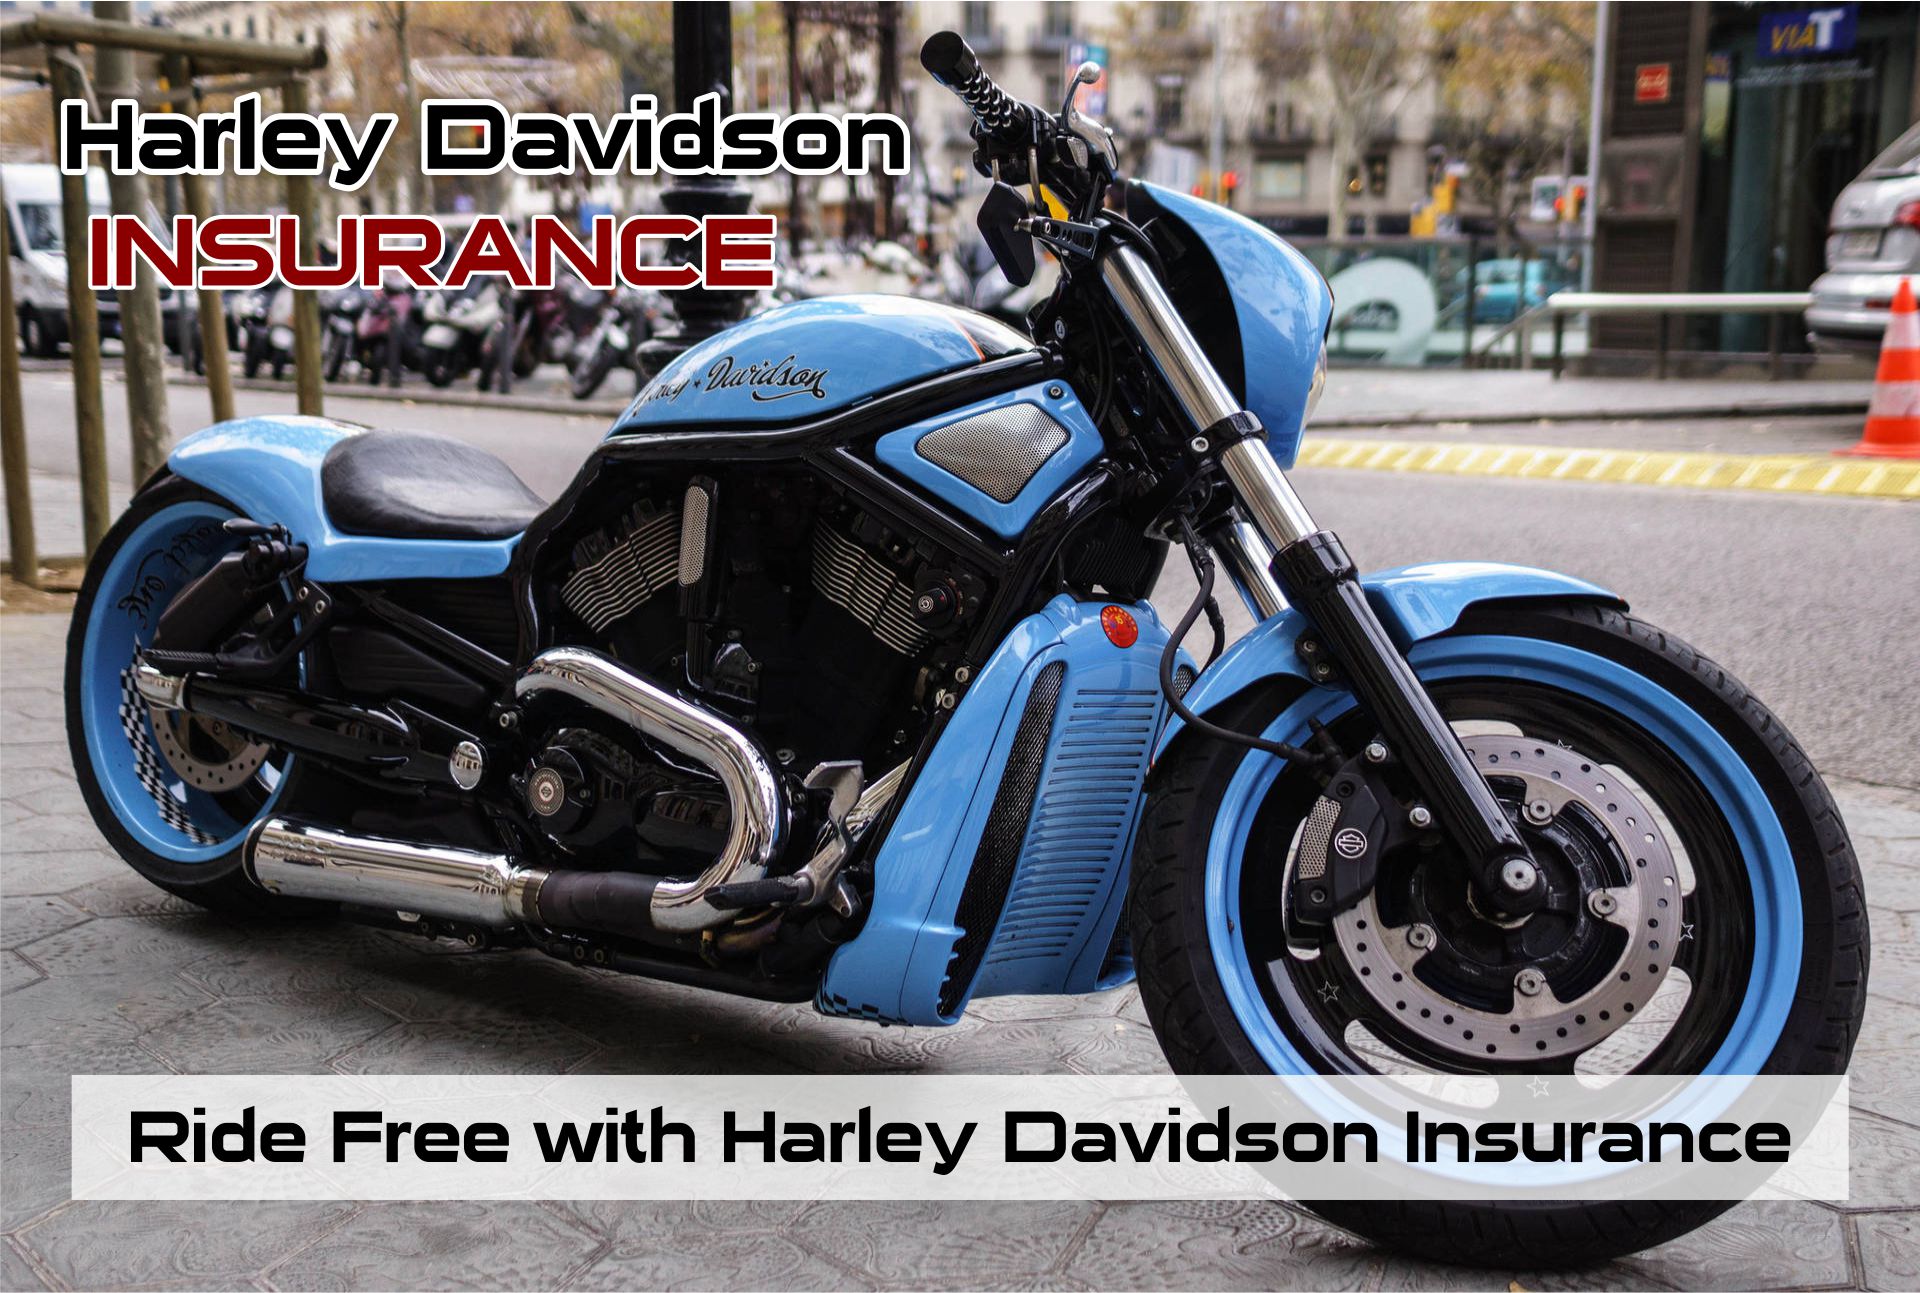 Harley Davidson insurance